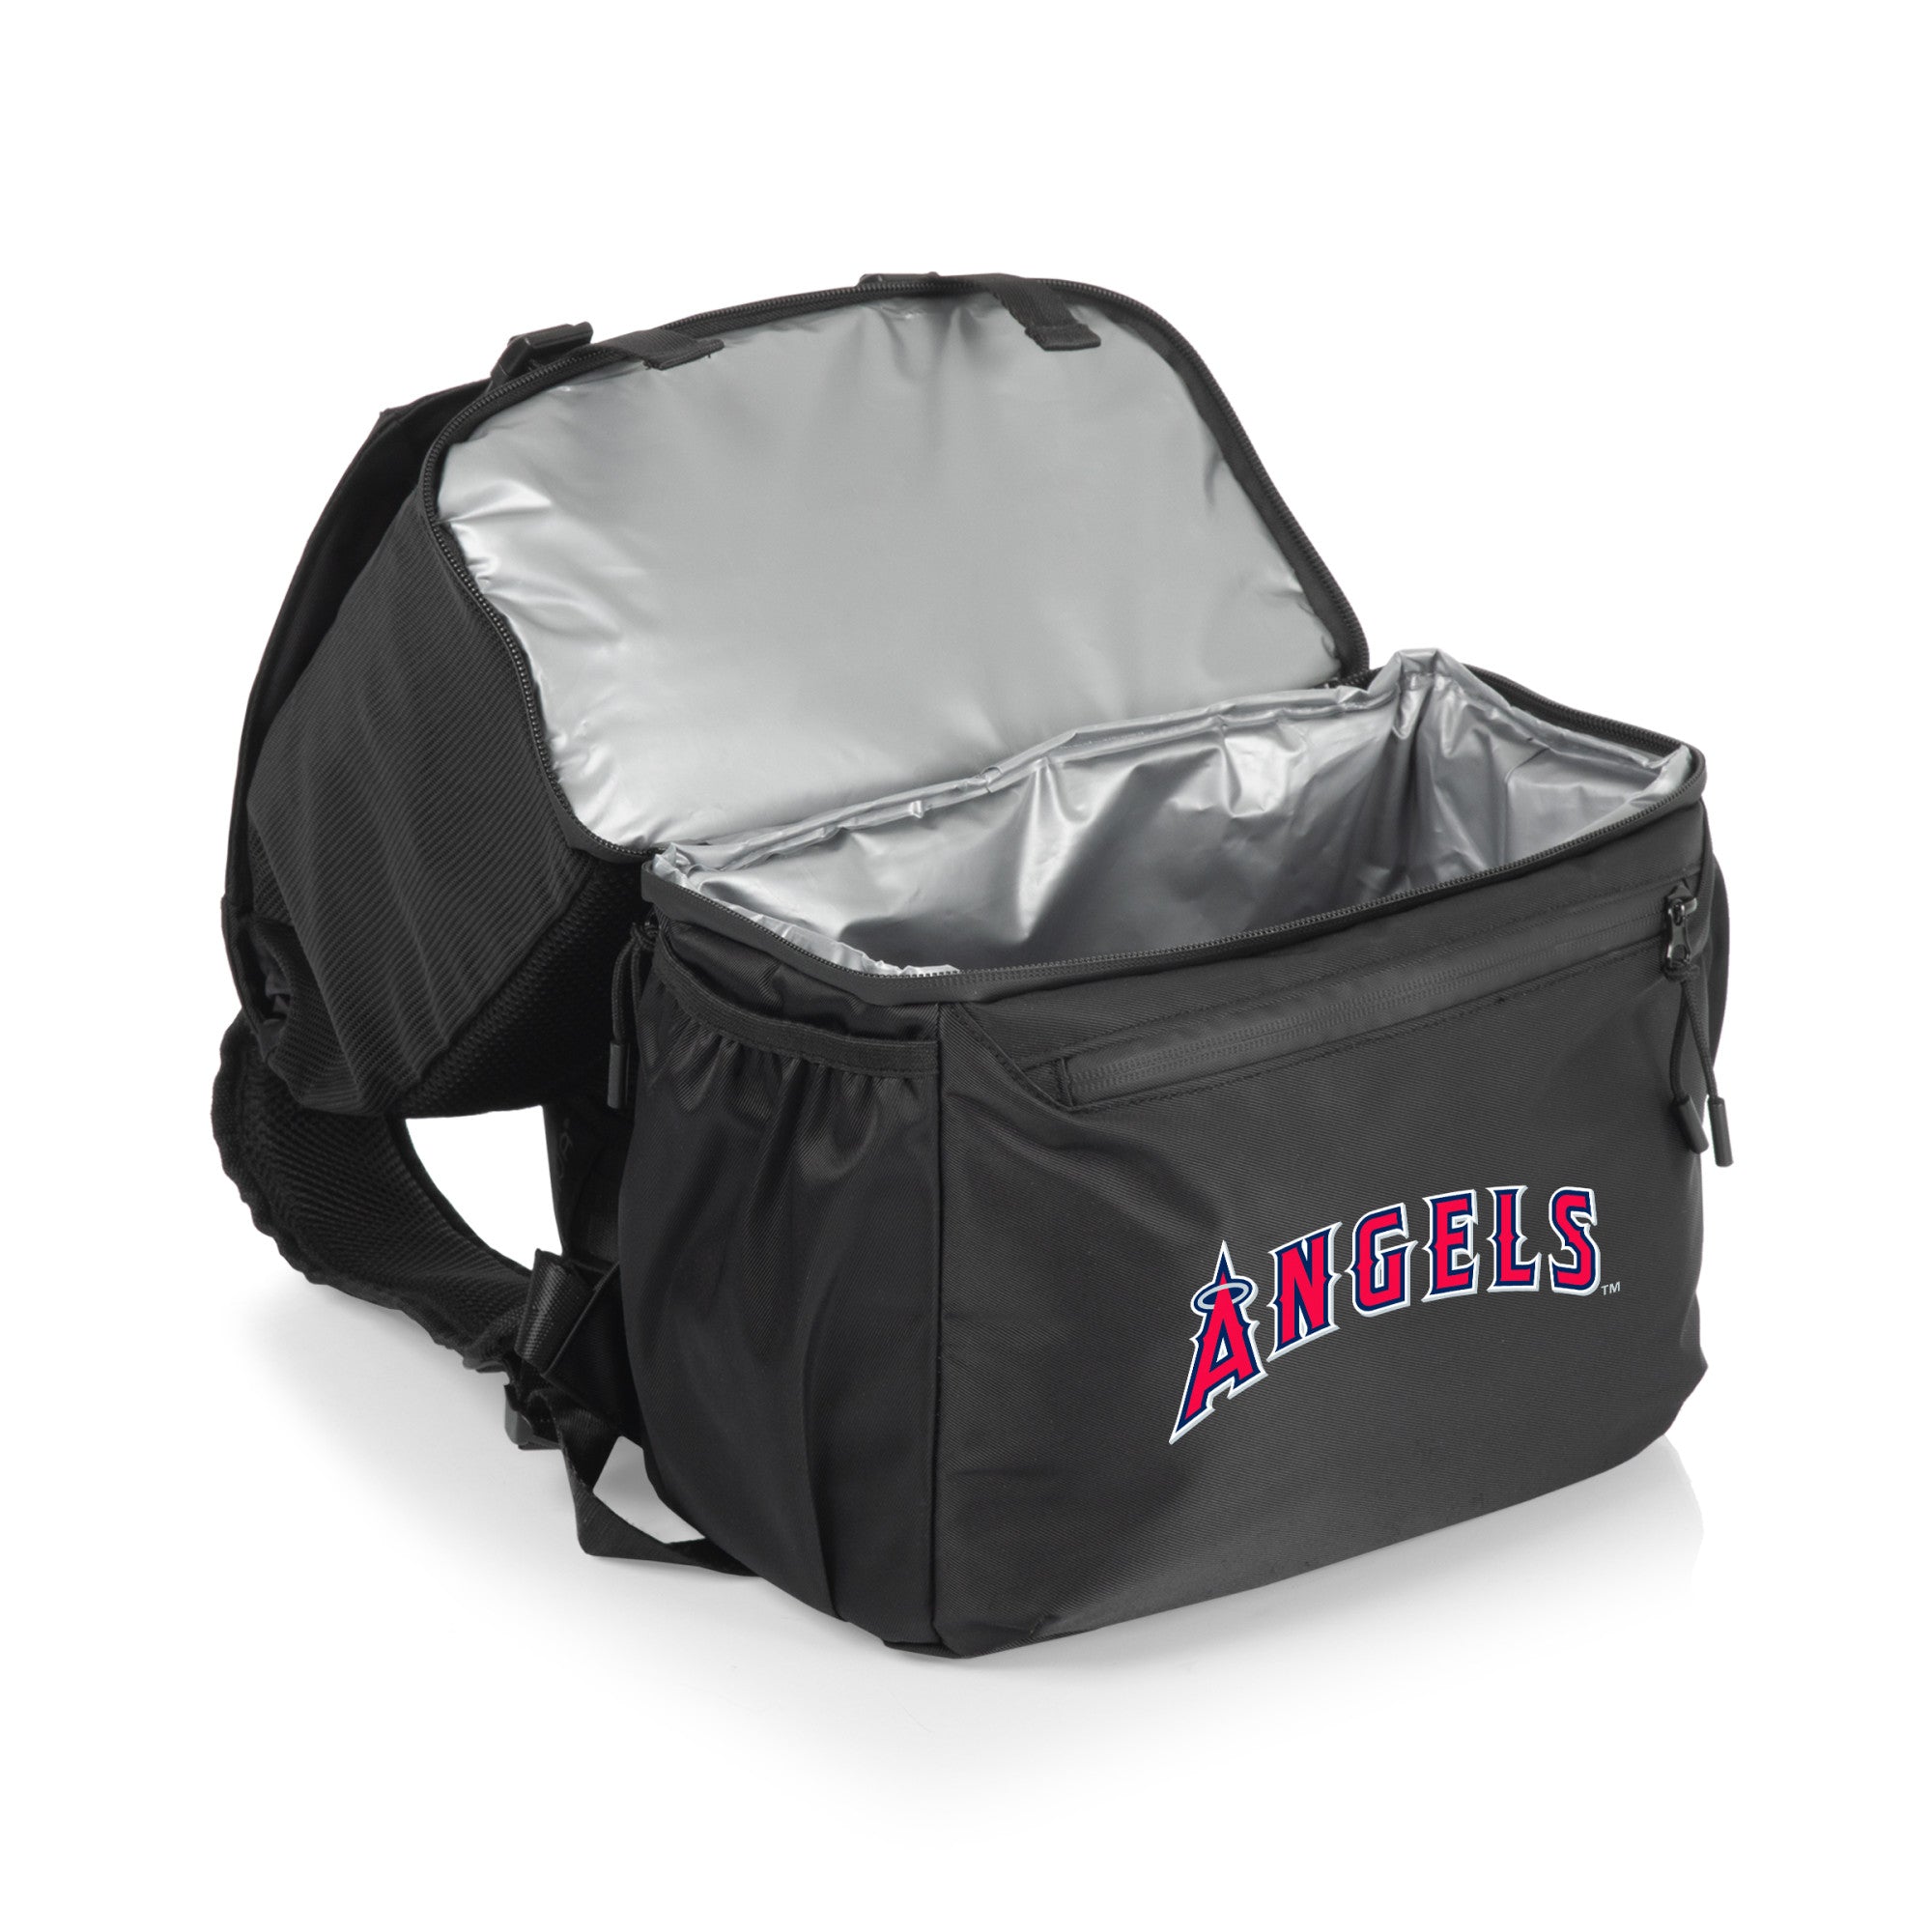 Los Angeles Angels - Tarana Backpack Cooler